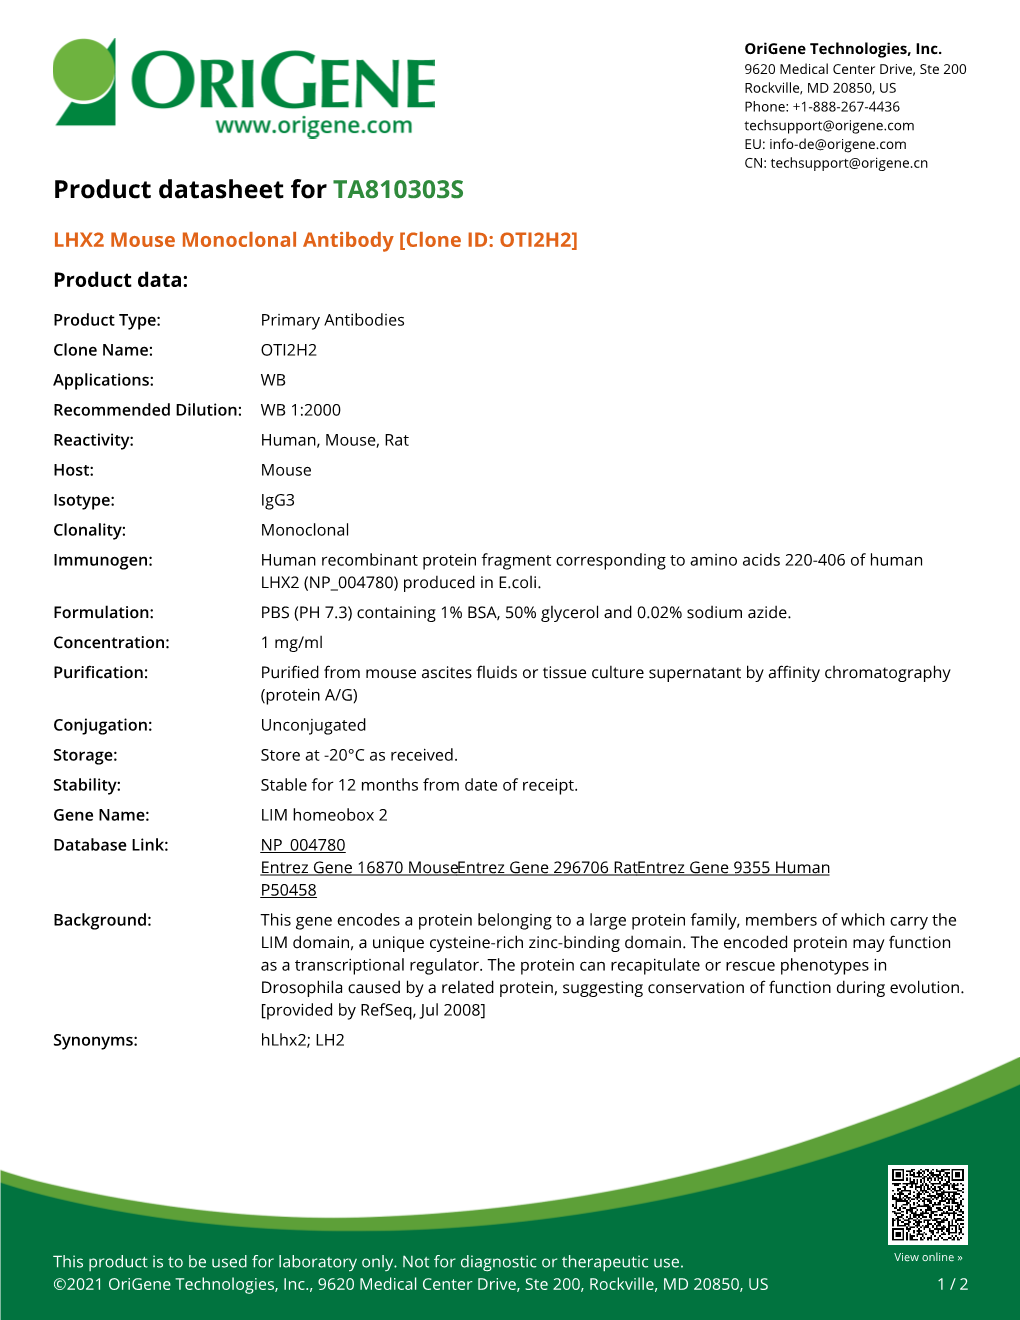 LHX2 Mouse Monoclonal Antibody [Clone ID: OTI2H2] Product Data